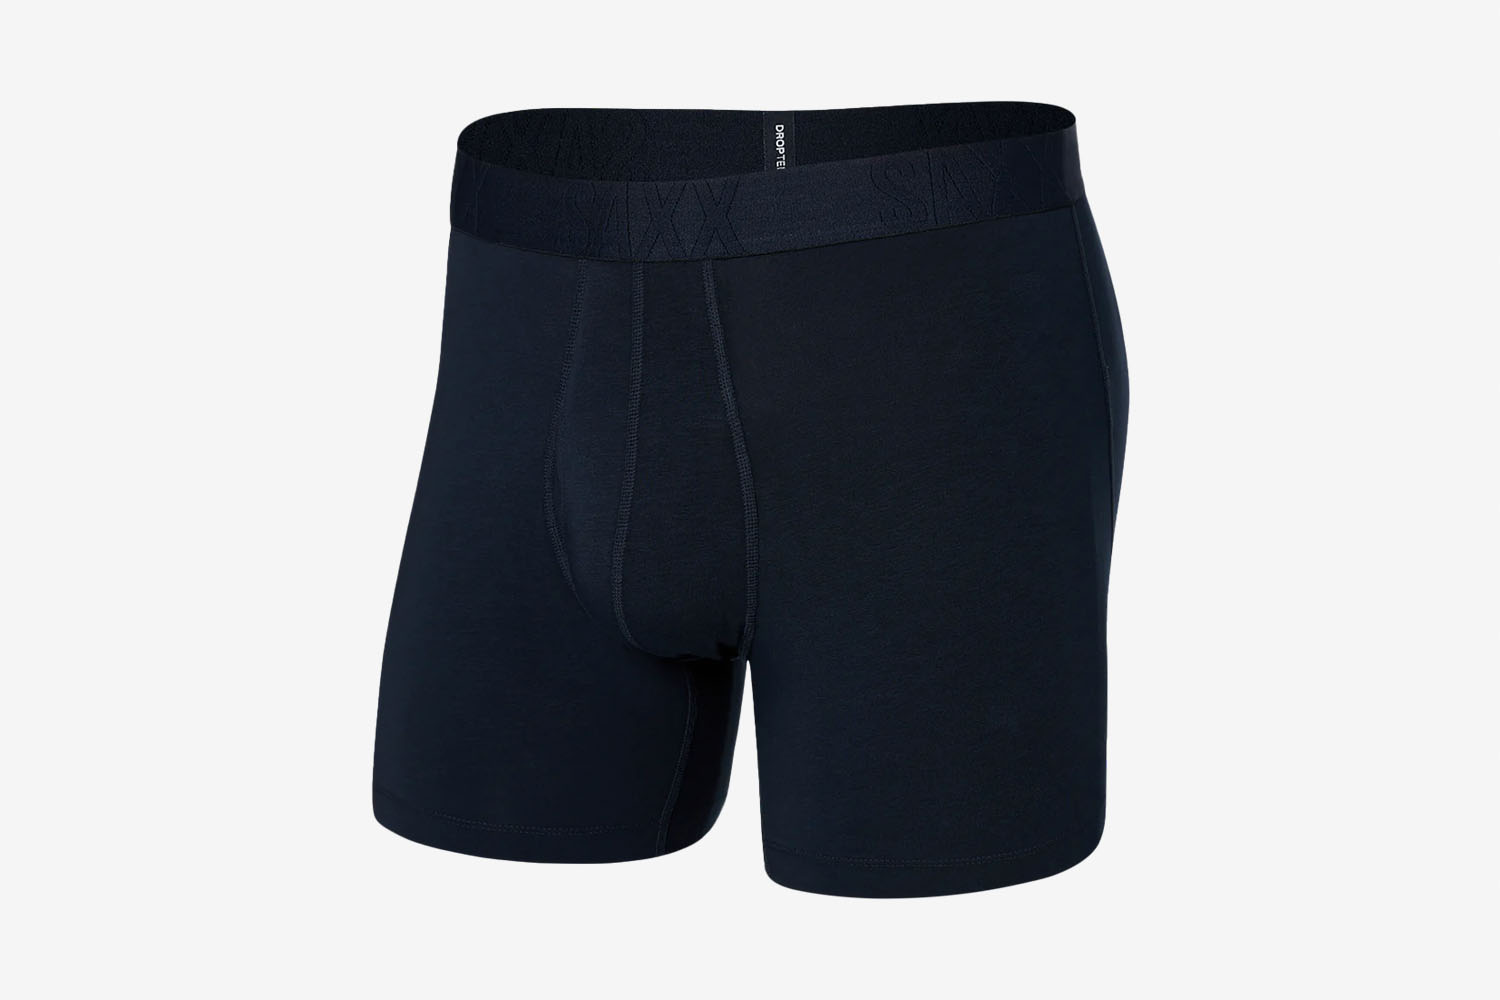 Saxx Men's Underwear - Droptemp Cooling Cotton Boxer Brief Fly